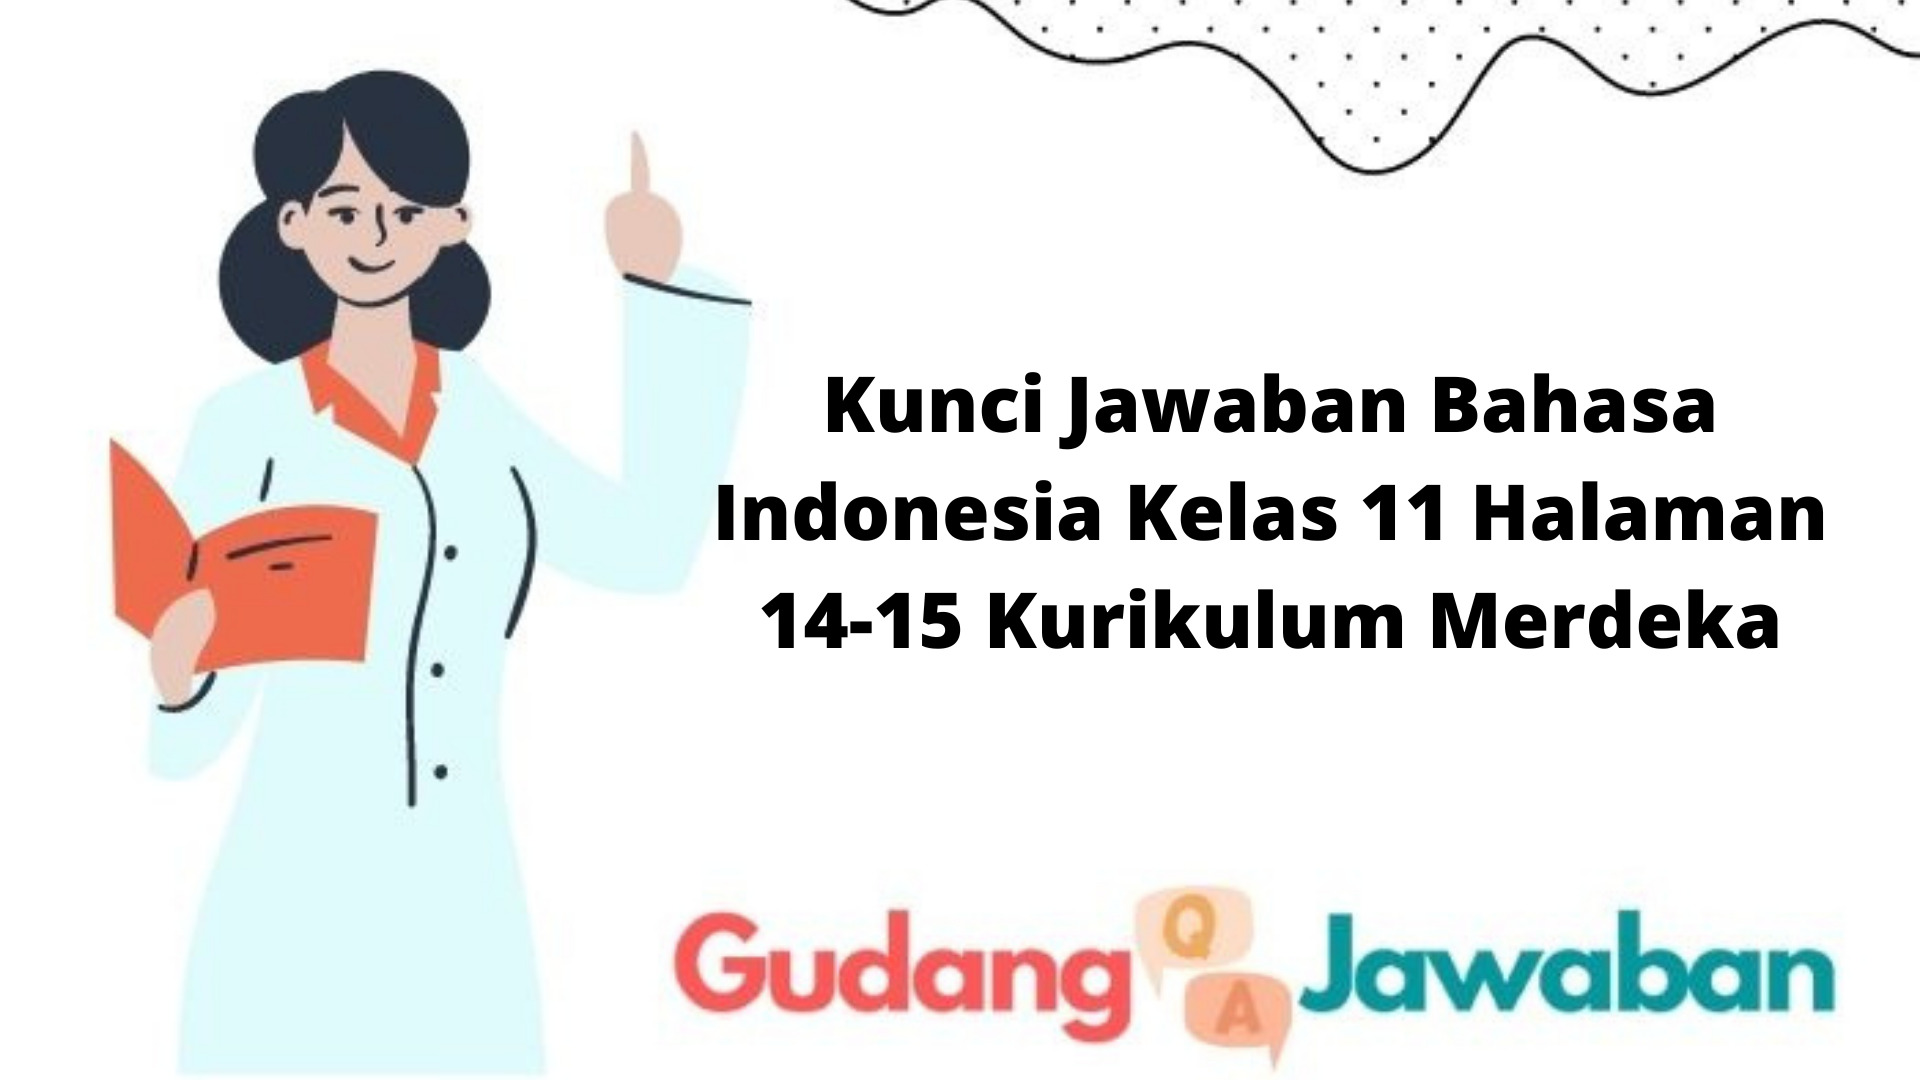 Kunci Jawaban Bahasa Indonesia Kelas 11 Halaman 14-15 Kurikulum Merdeka